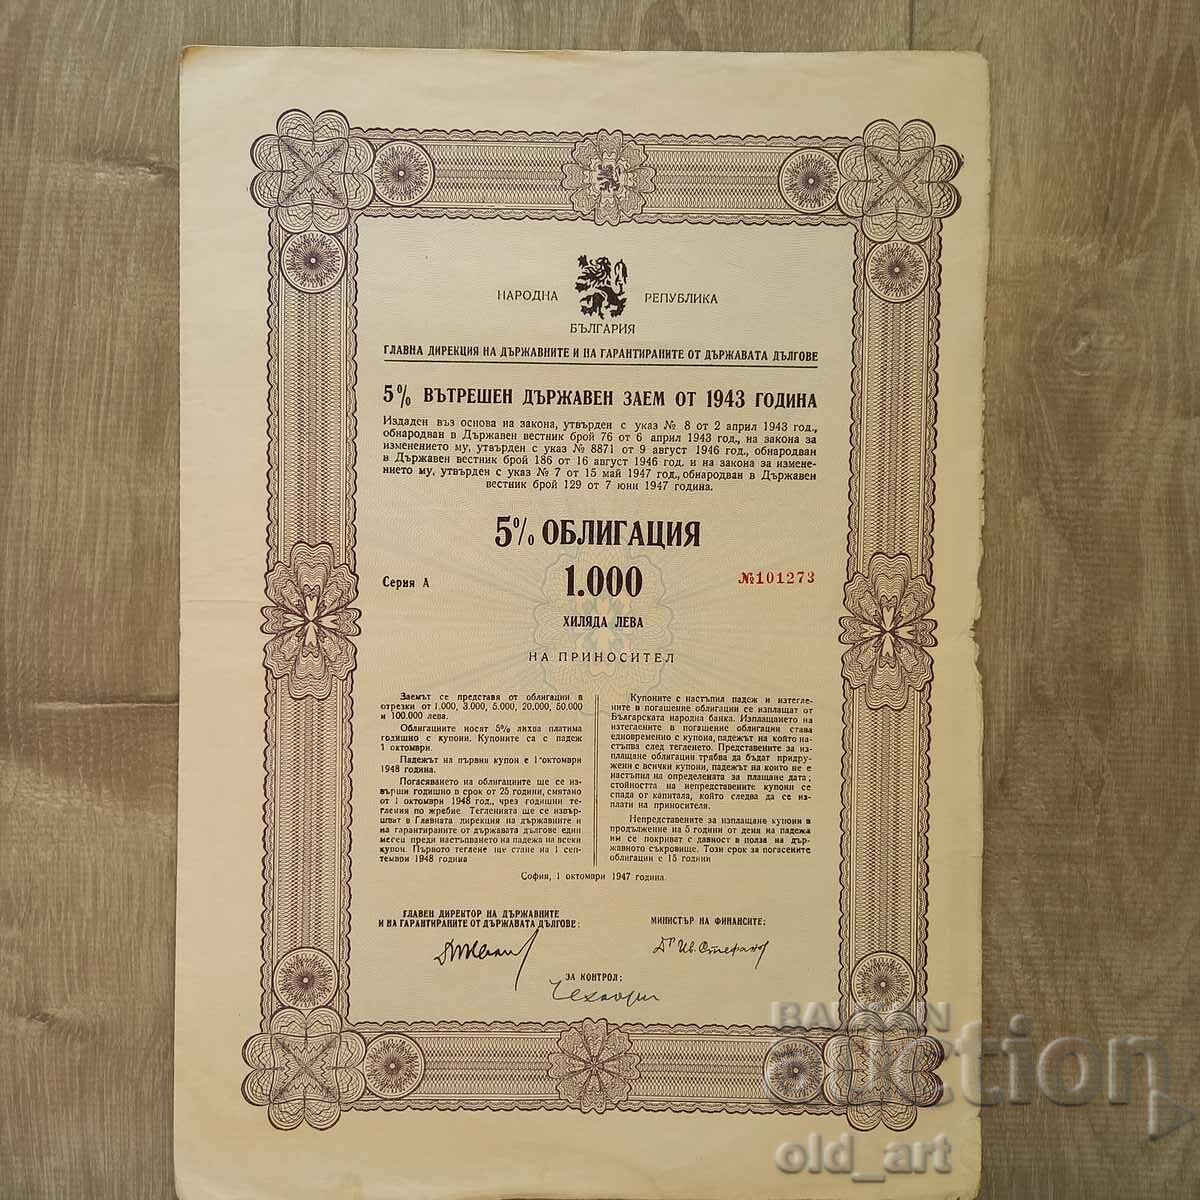 Bond 1000 BGN 1943. Internal state loan